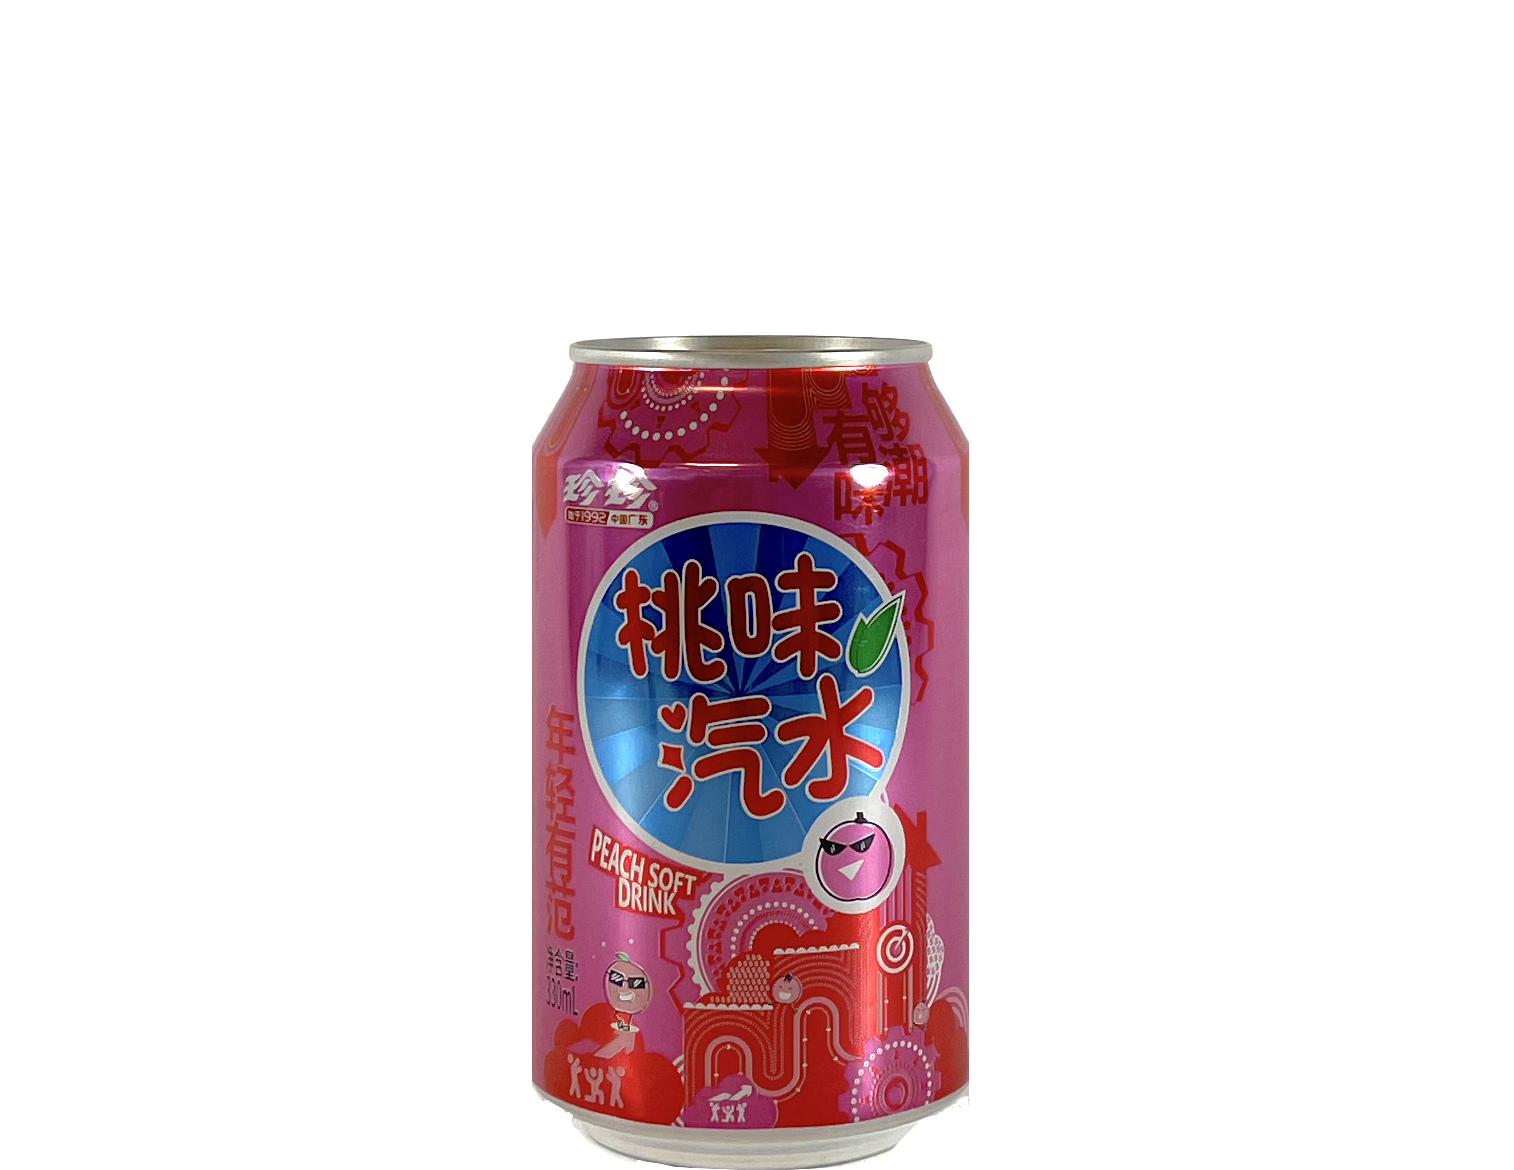 Dryck Soda Persika 330ml Zhen Zhen Kina